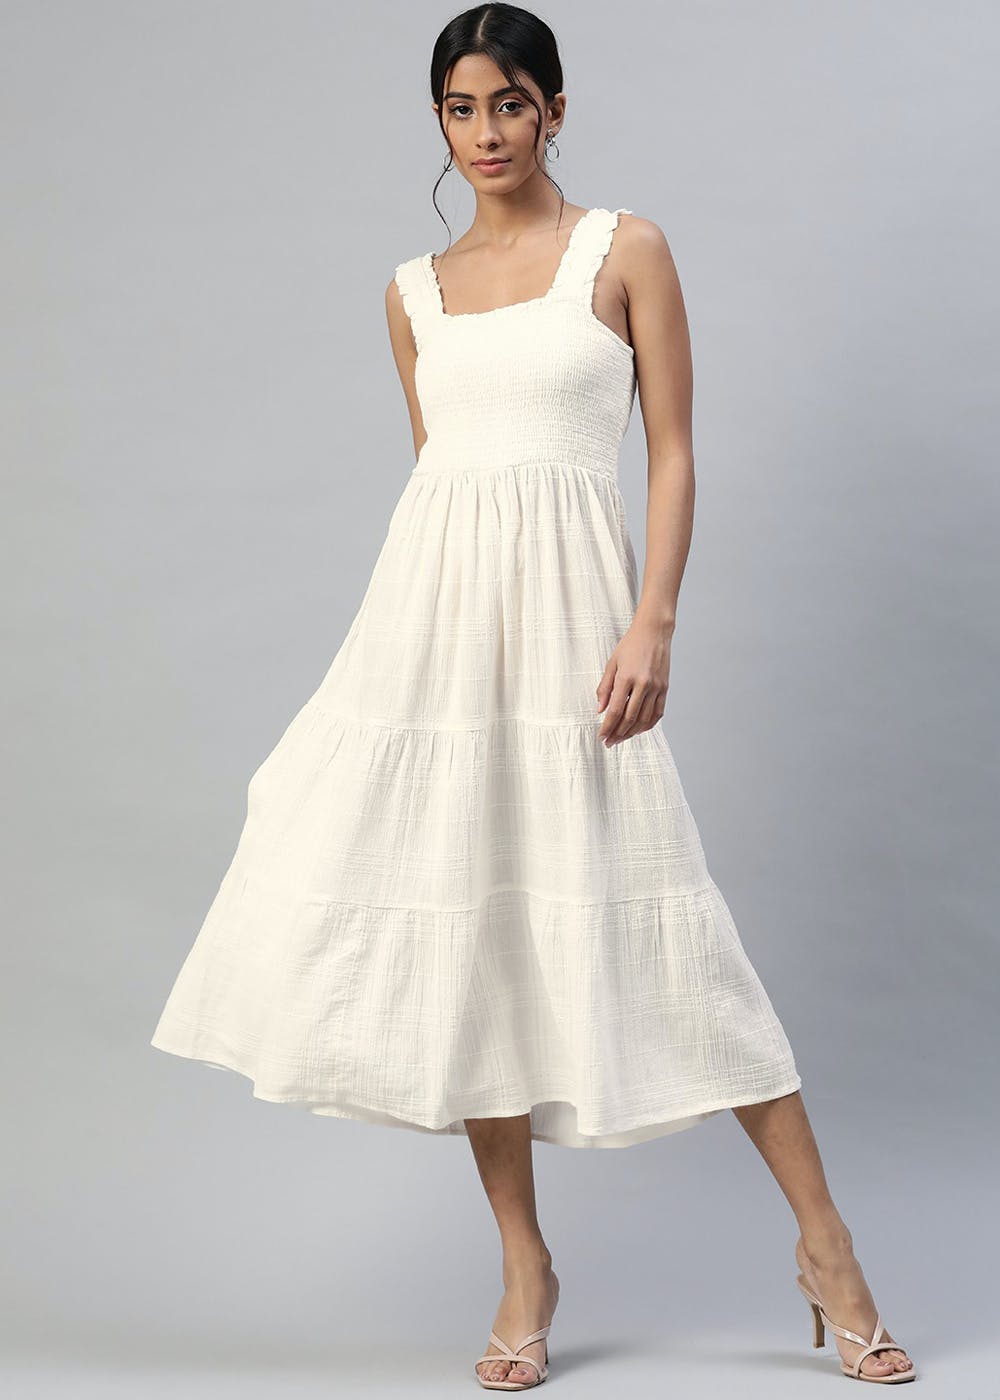 Get Front Smocking White Dress at ₹ 2299 | LBB Shop